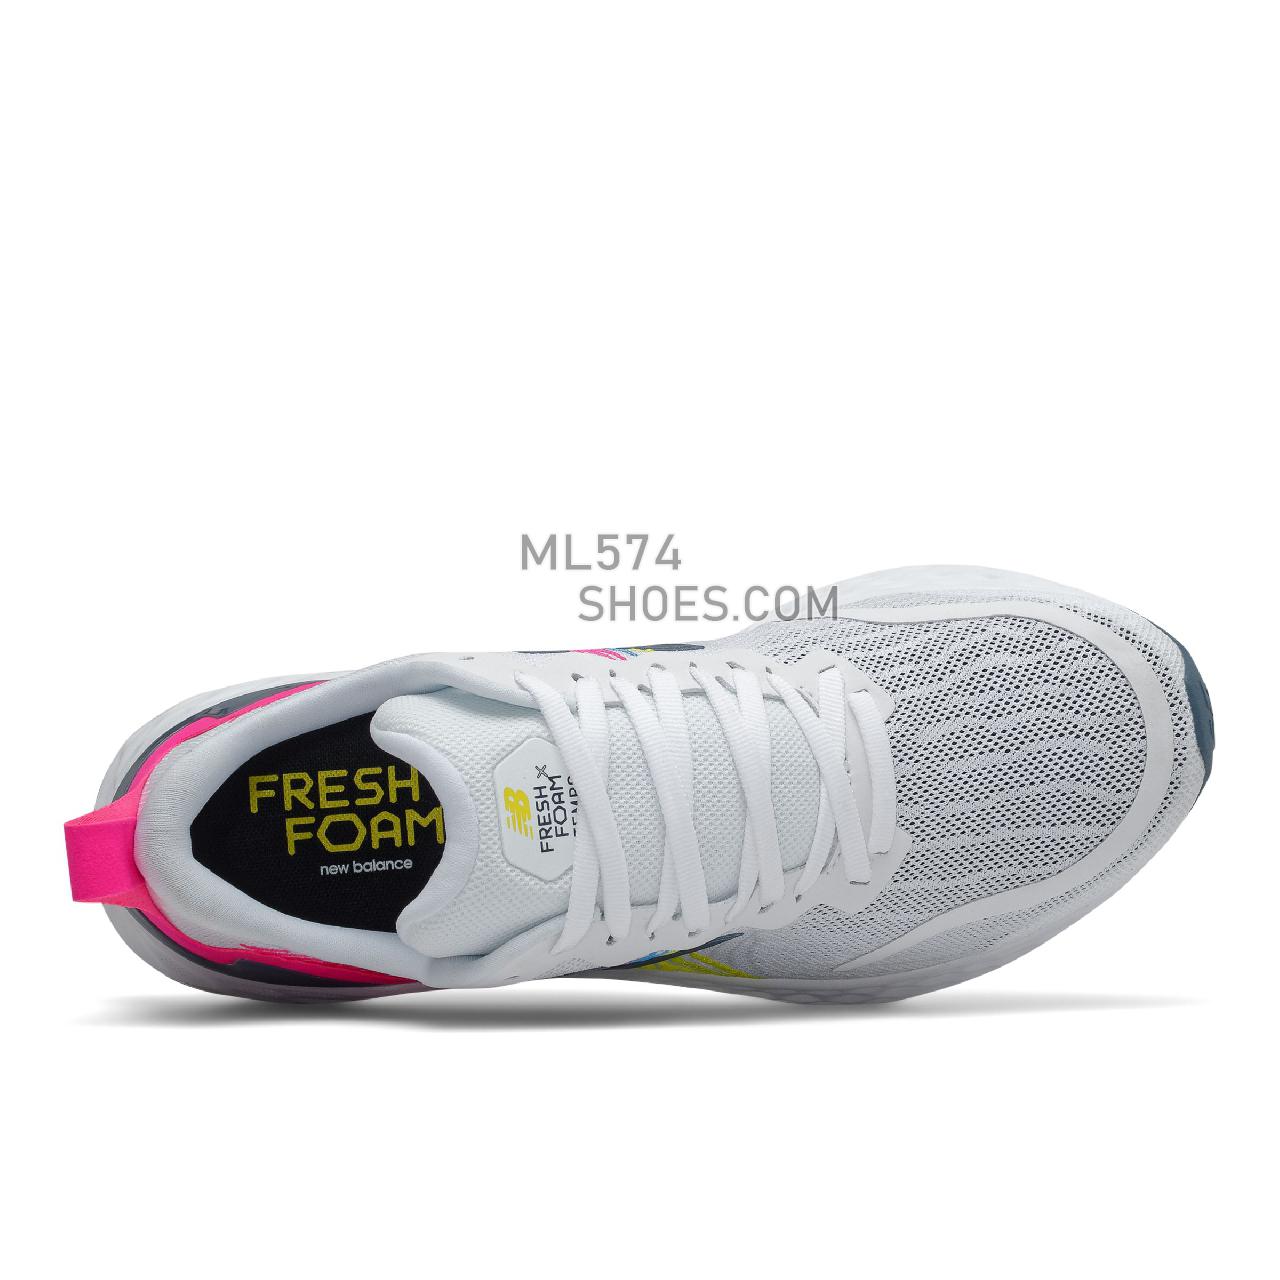 New Balance Fresh Foam Tempo - Men's Classic Sneakers - White with helium and sulphur yellow - MTMPOWM